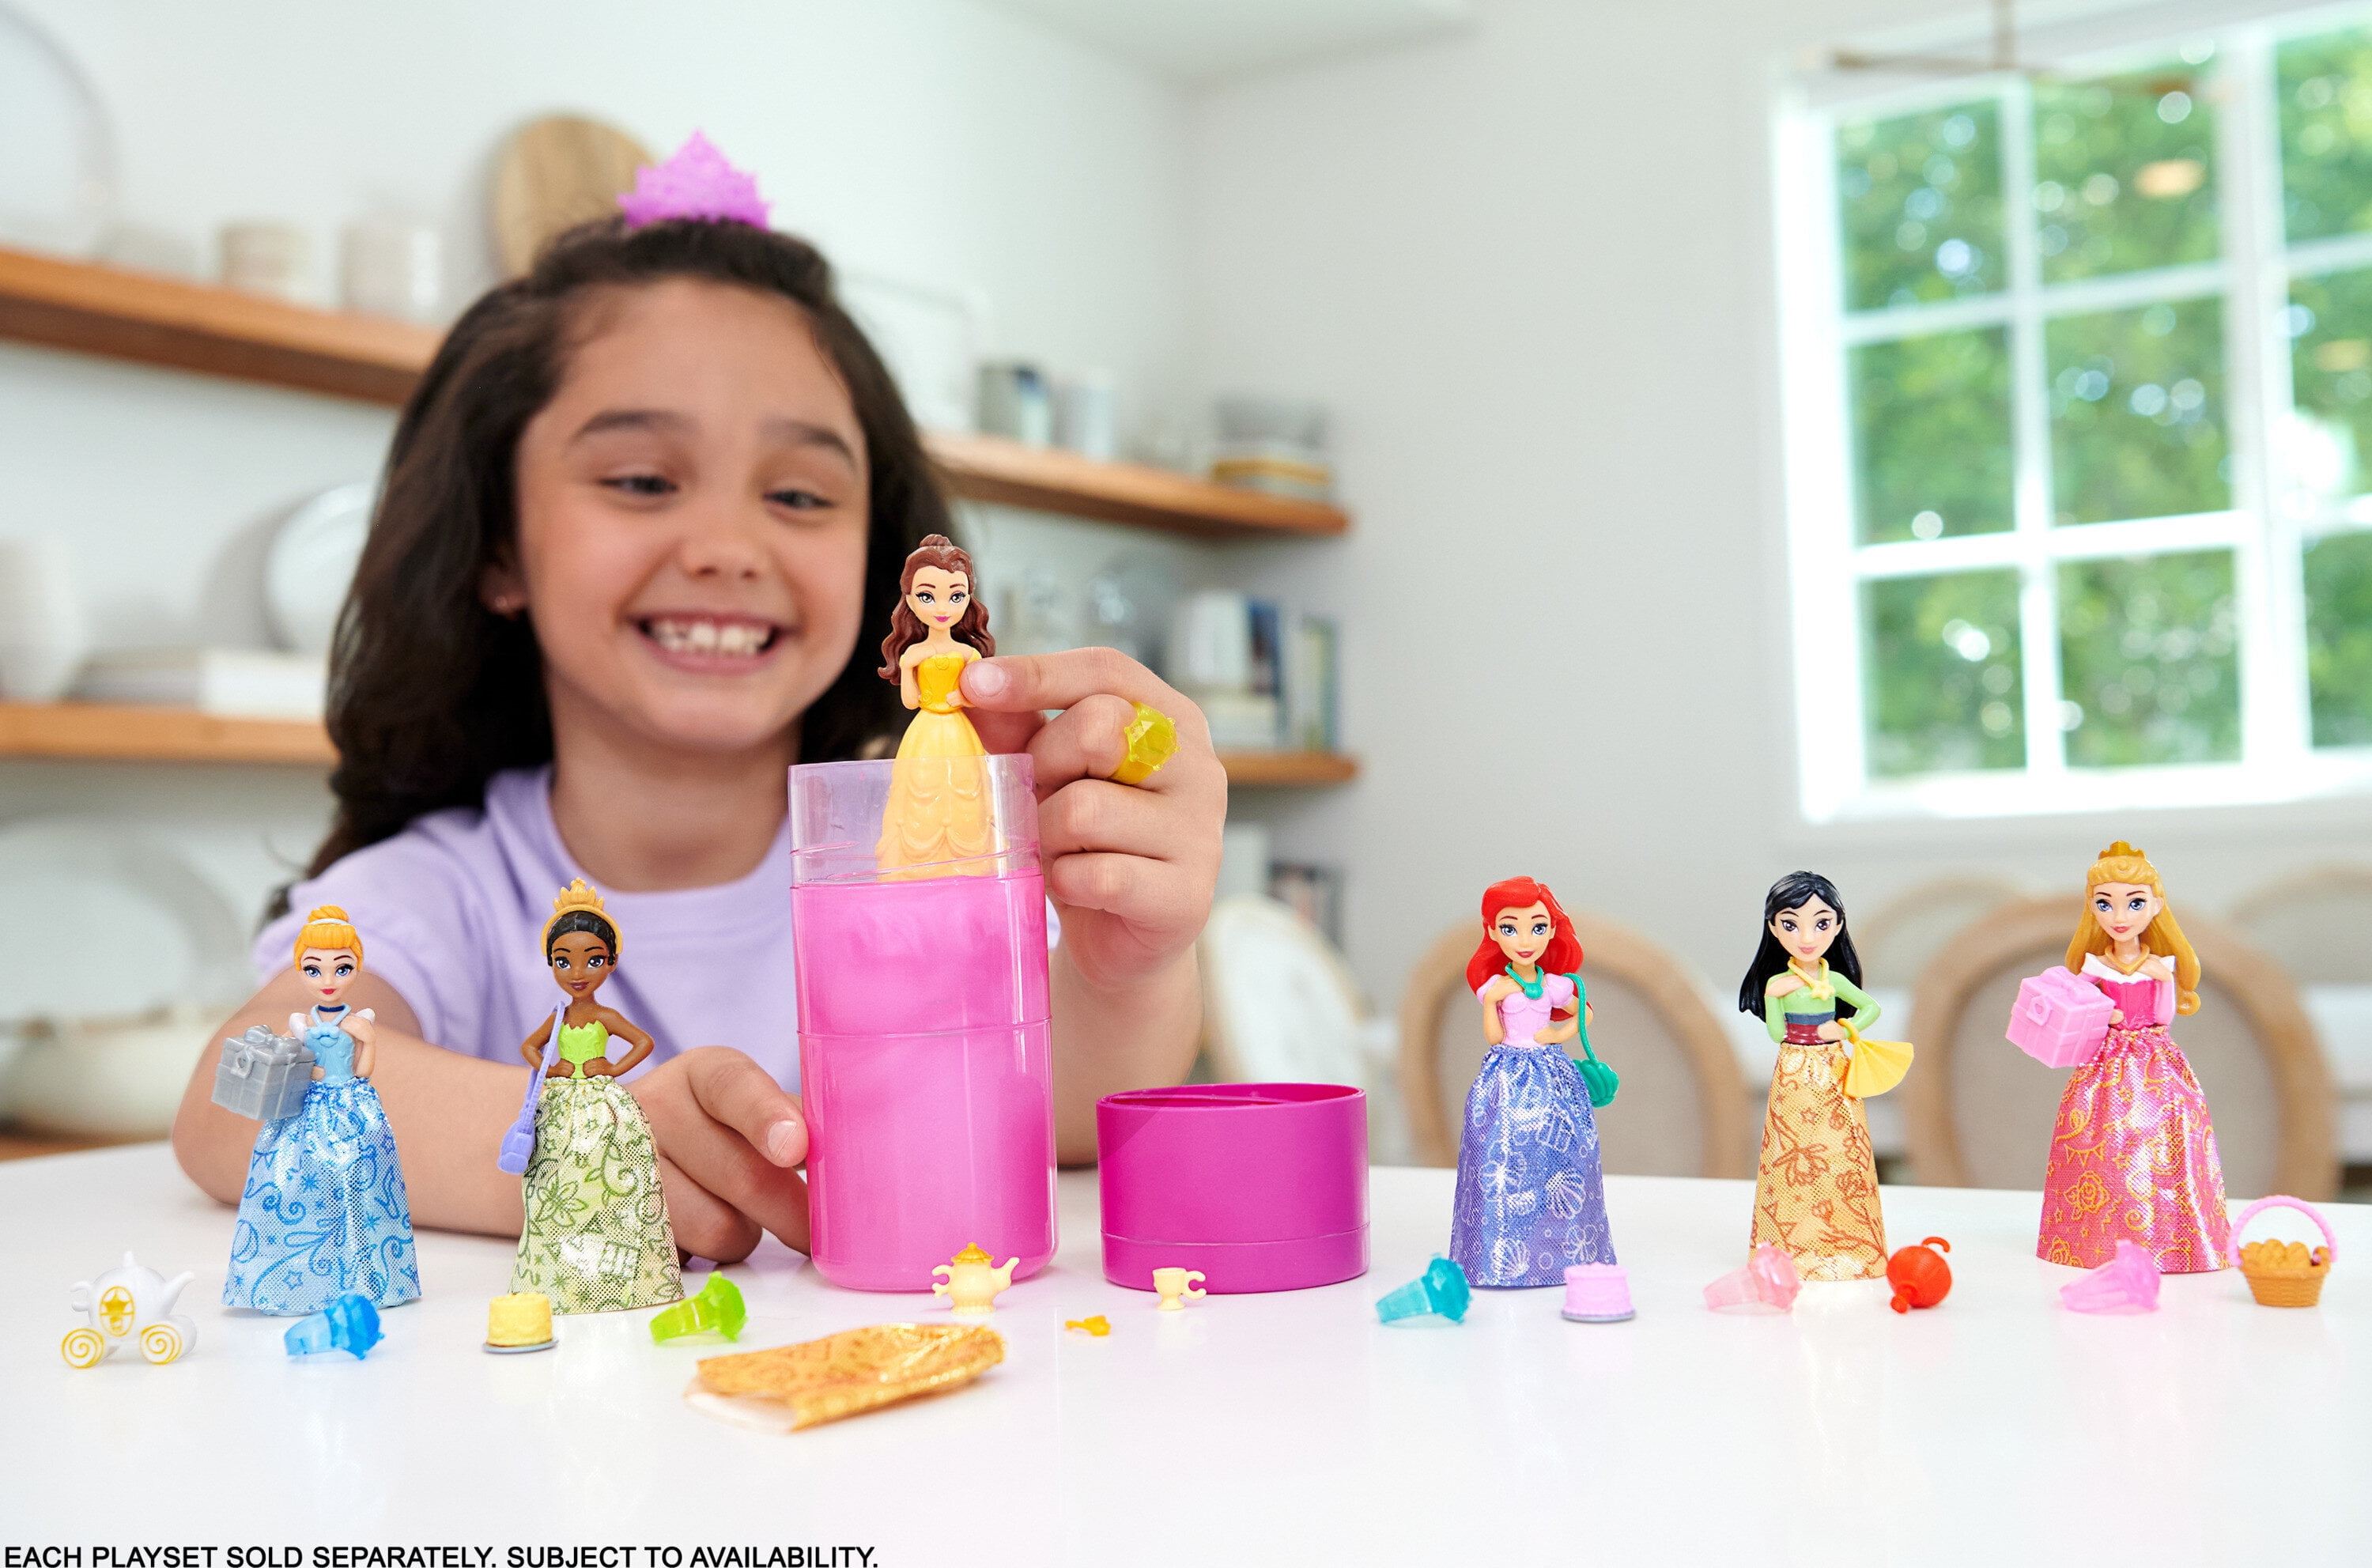 Disney Princess Party Dolls Reveal Color Series Surprises, with 6